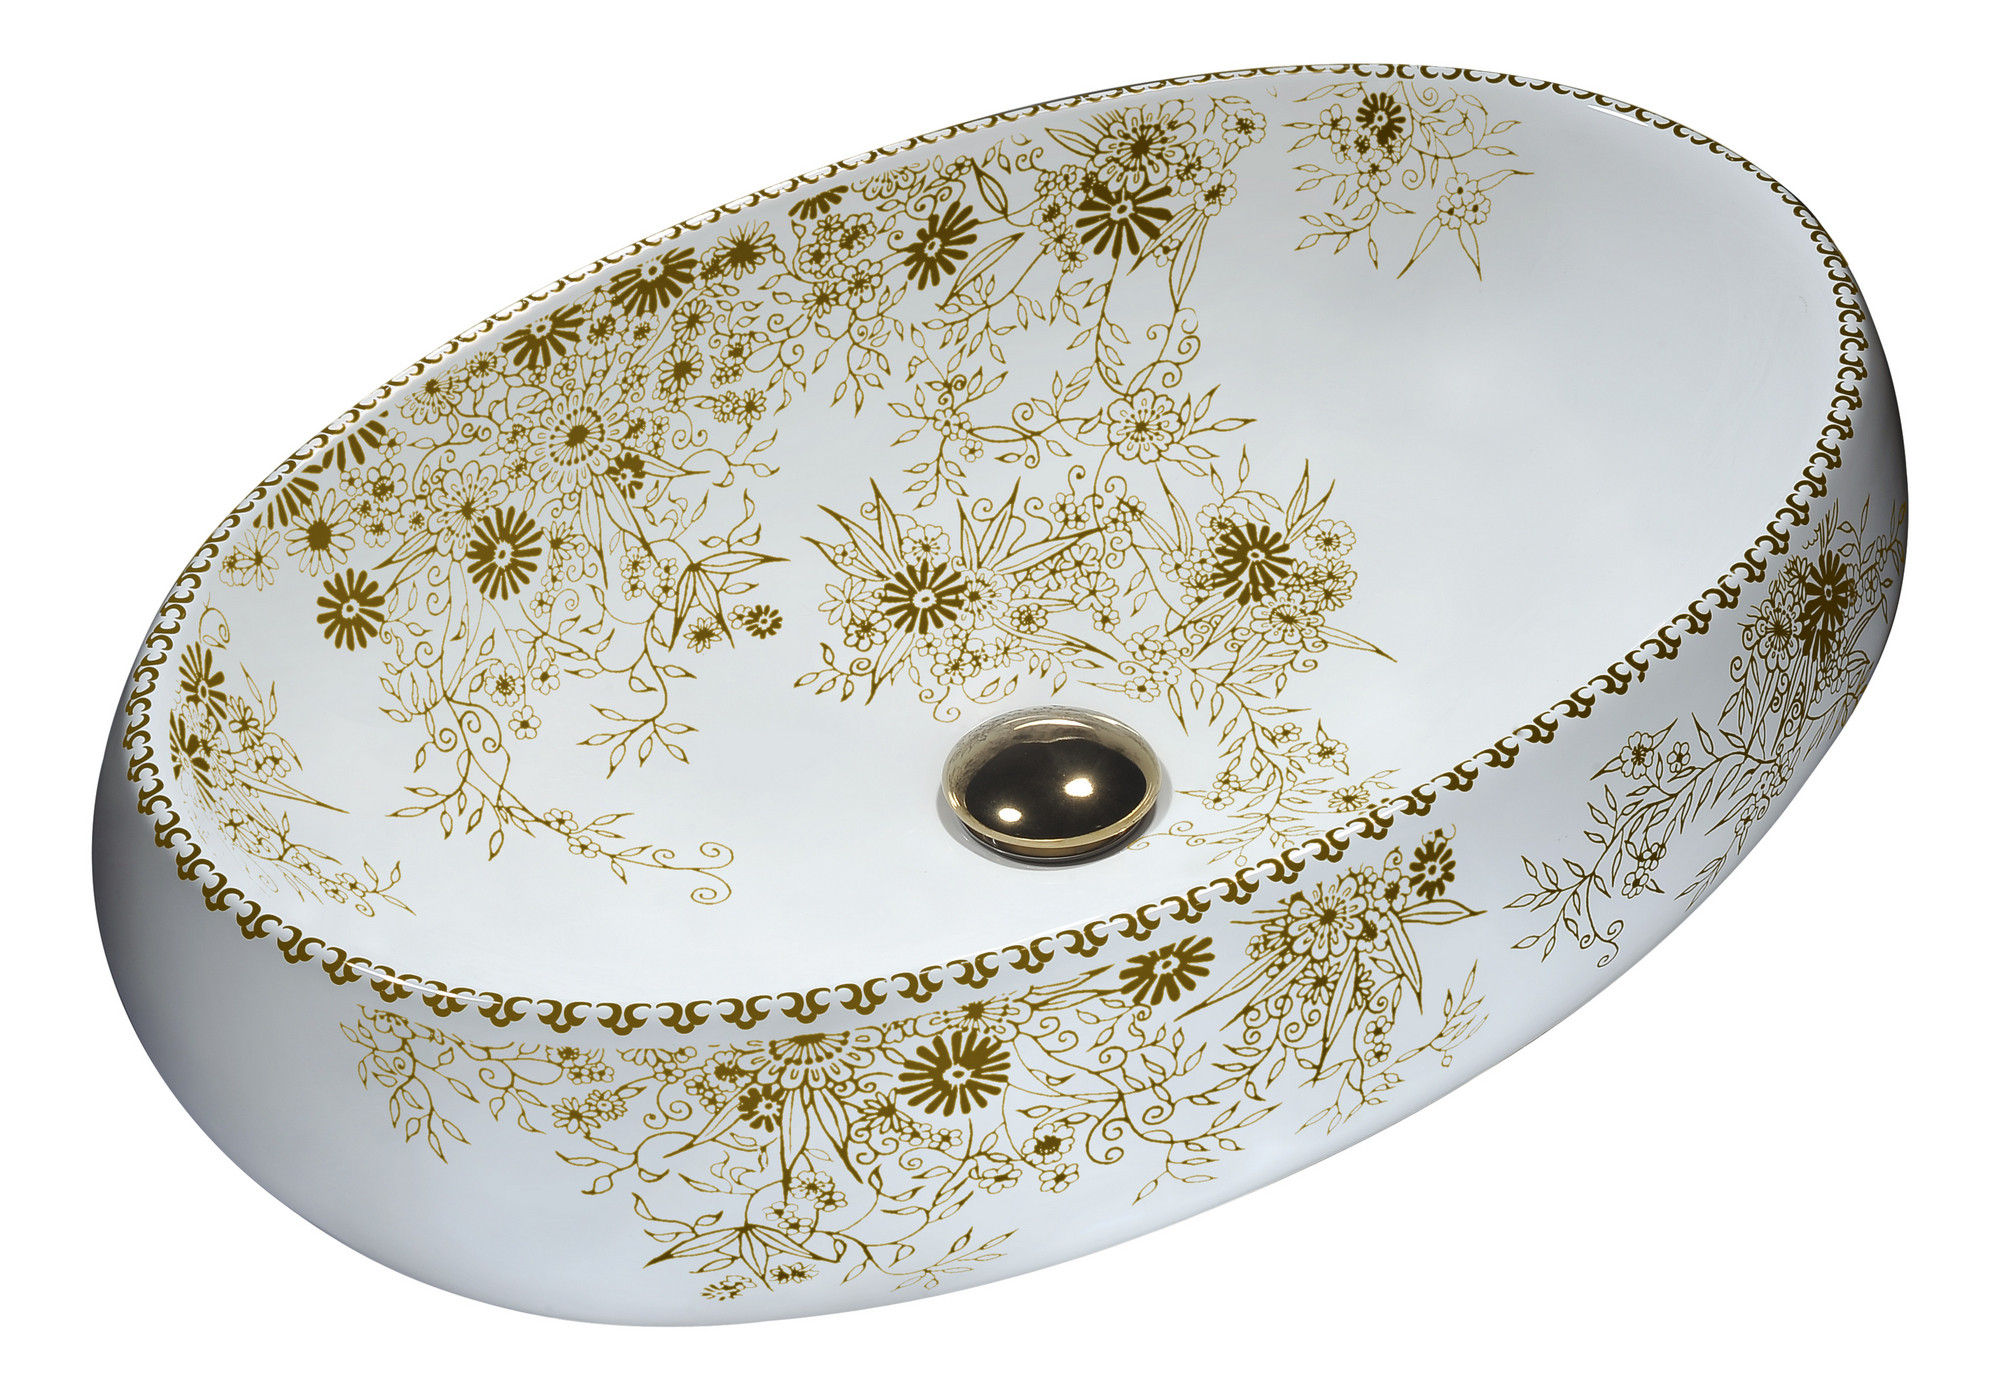 ANZZI LS-AZ267 Breeze Vitreous China Ceramic Vessel Sink In Floral Gold